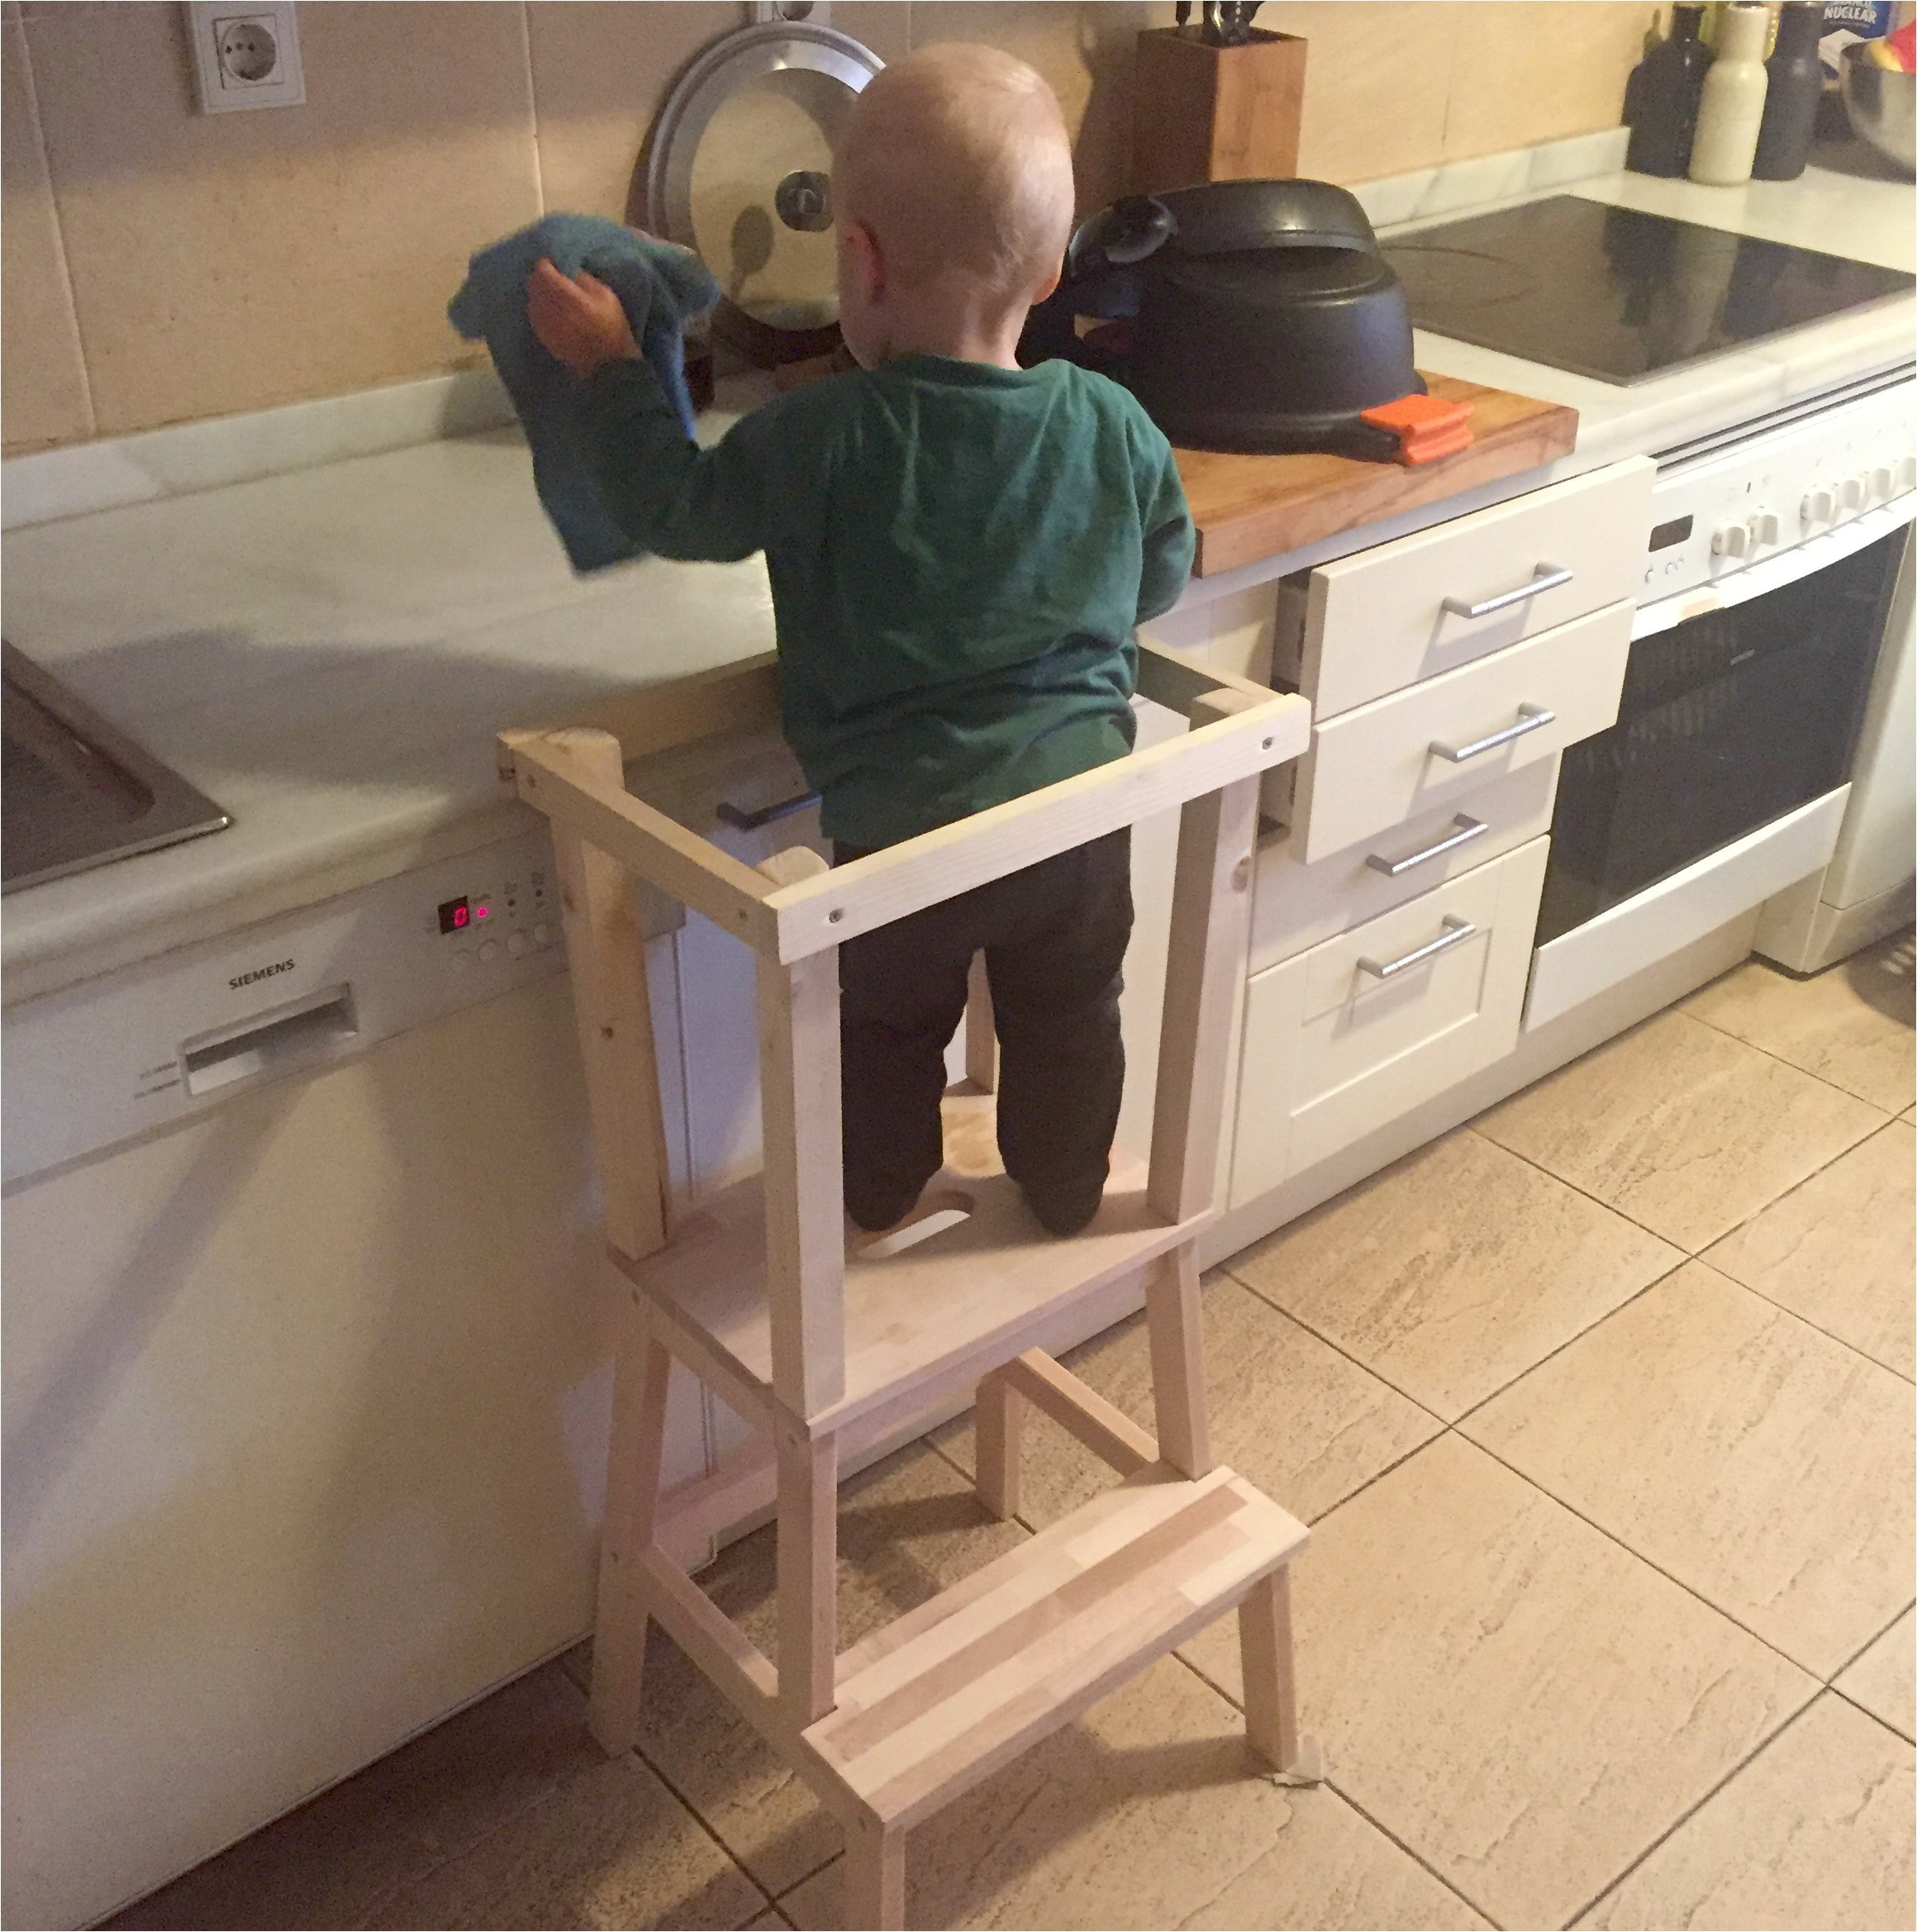 DIY Step Stool For Toddler
 Diy toddler Step Stool with Rails